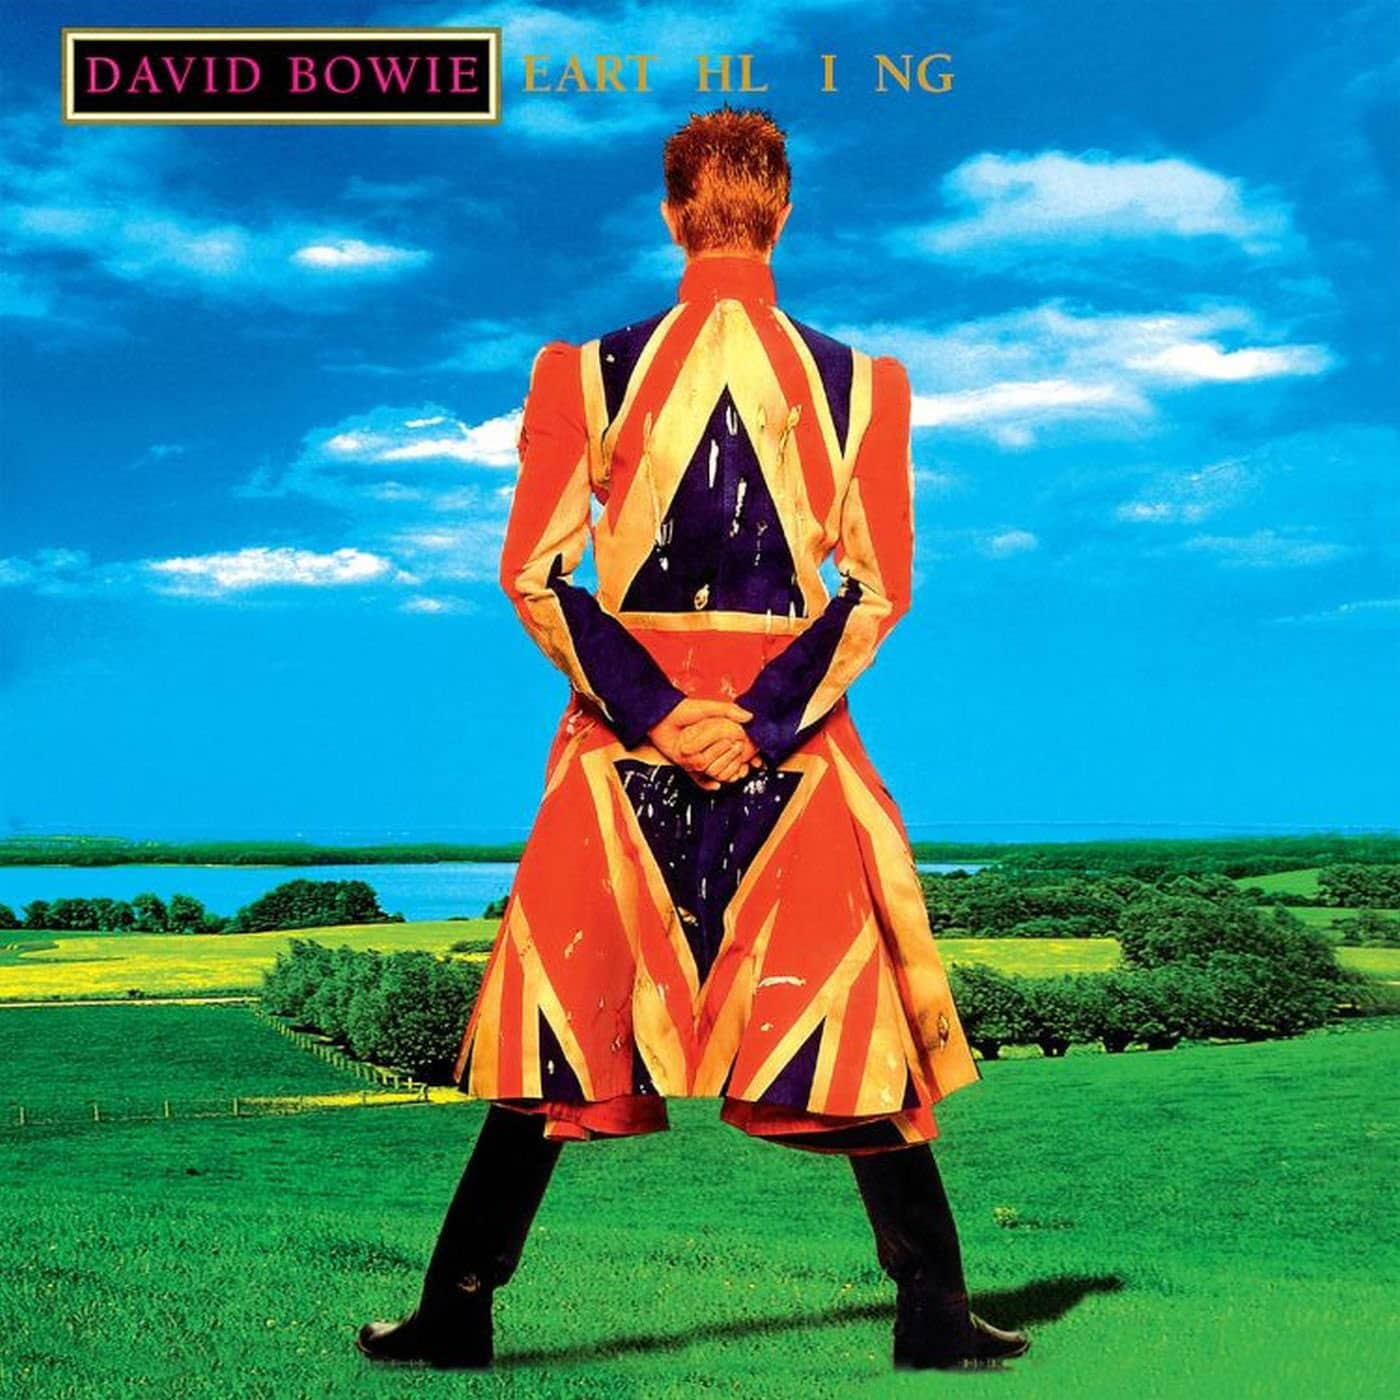 Обложка альбома Дэвида Боуи Earthling 1997 год